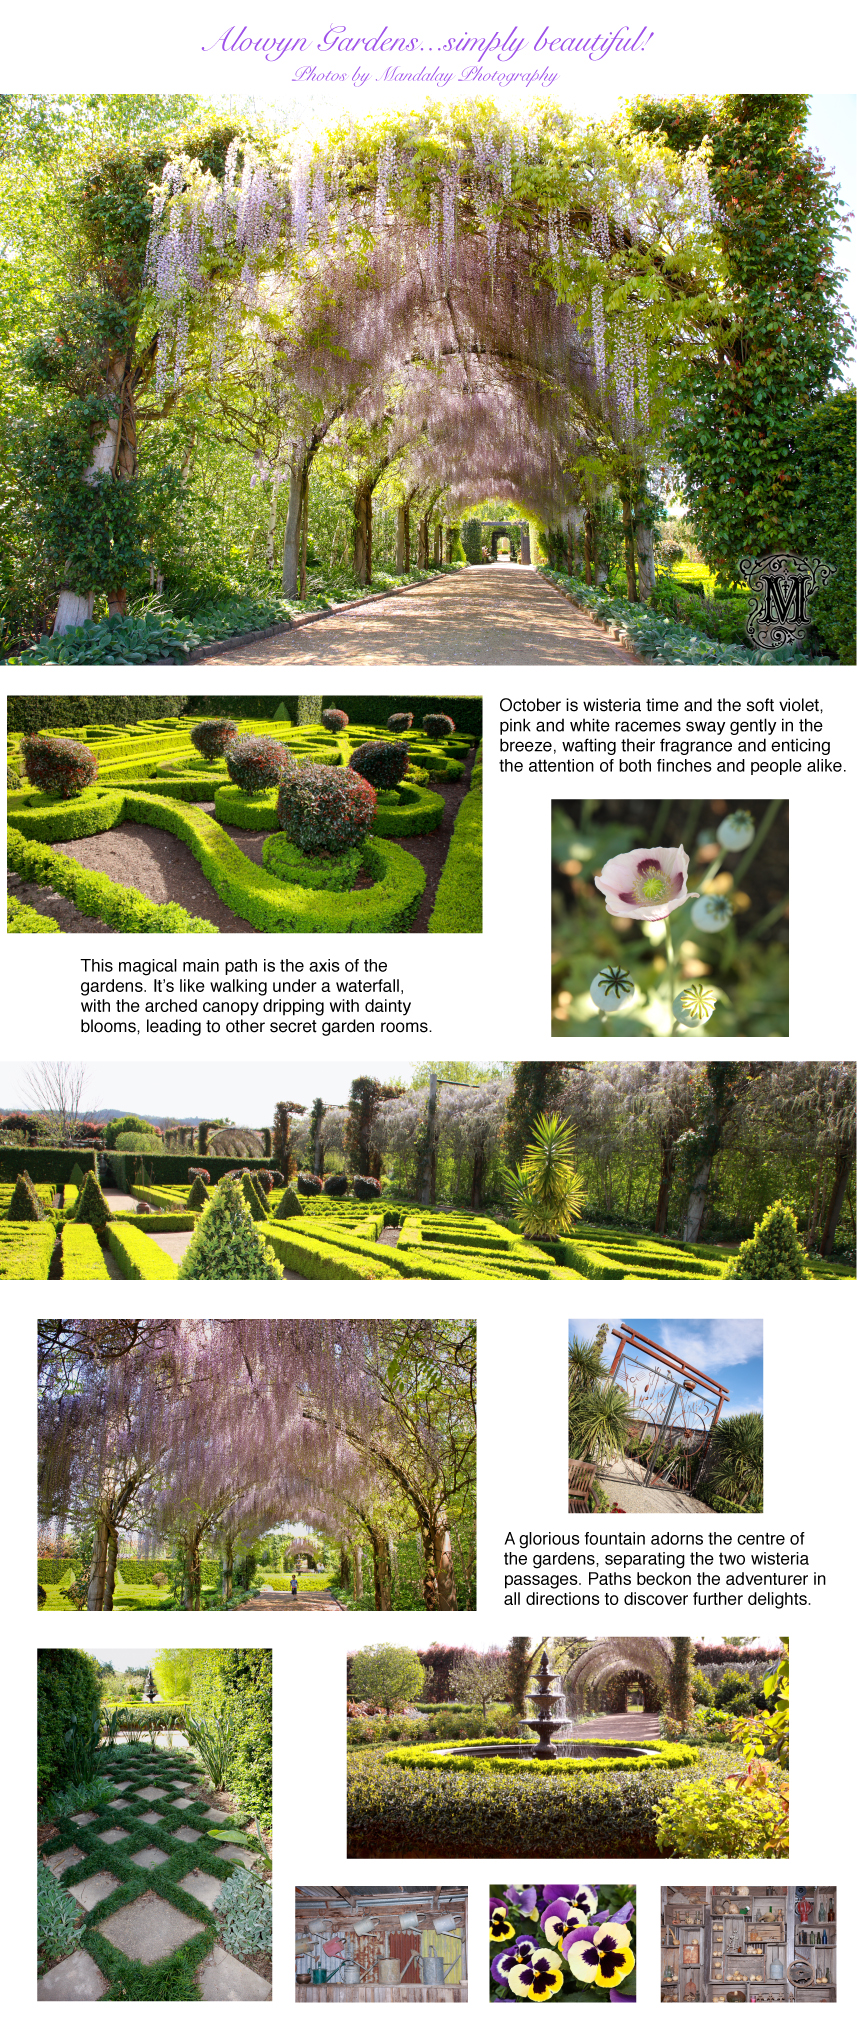 Alowyn Gardens - beautiful Spring photos by Mandalay Photography